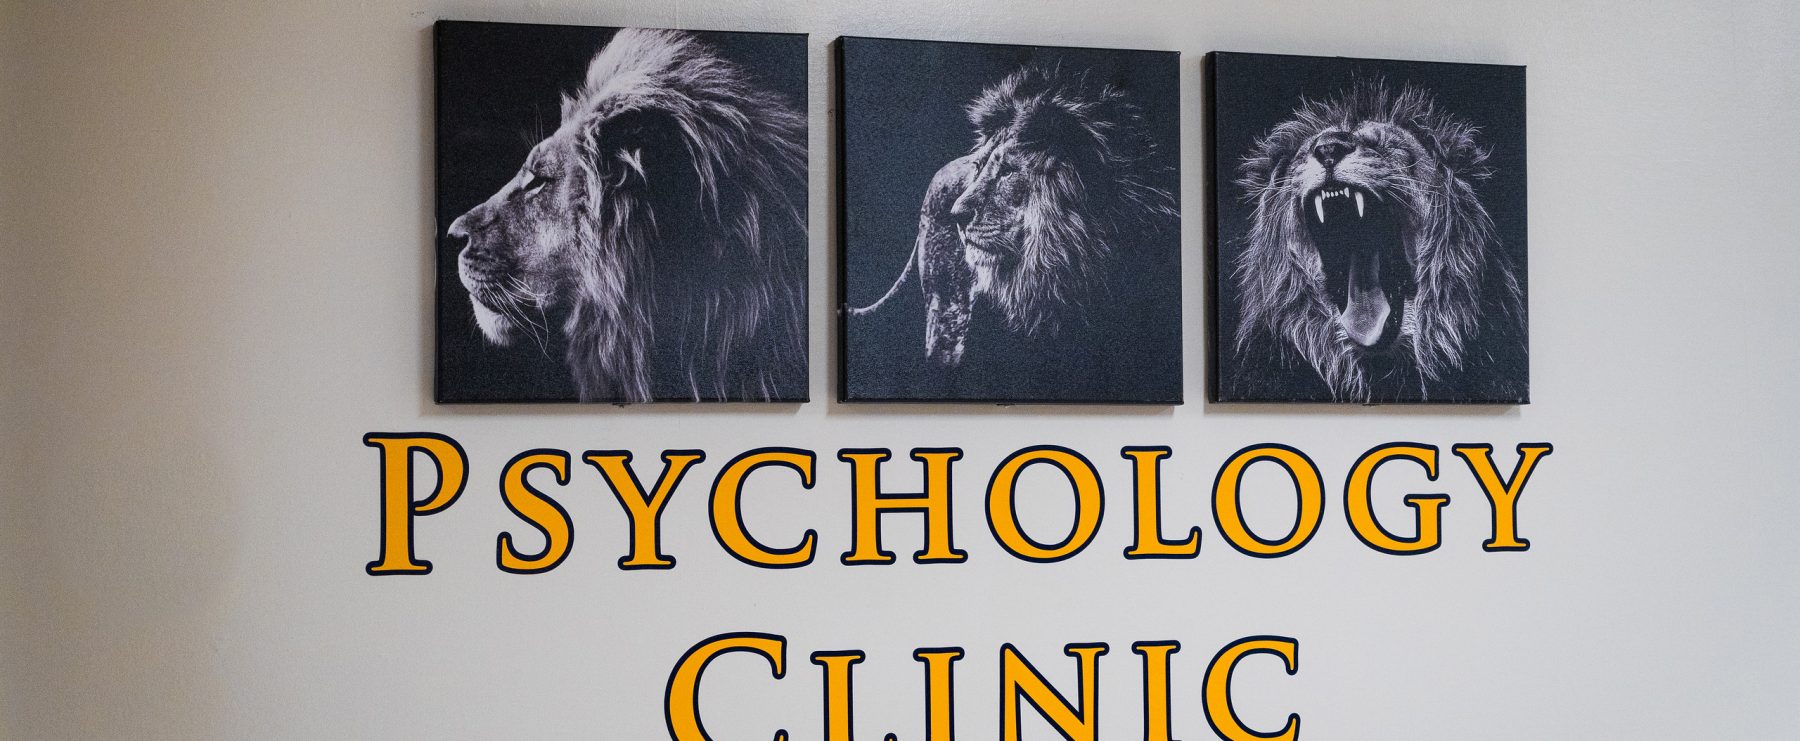 Psychology Clinic wall